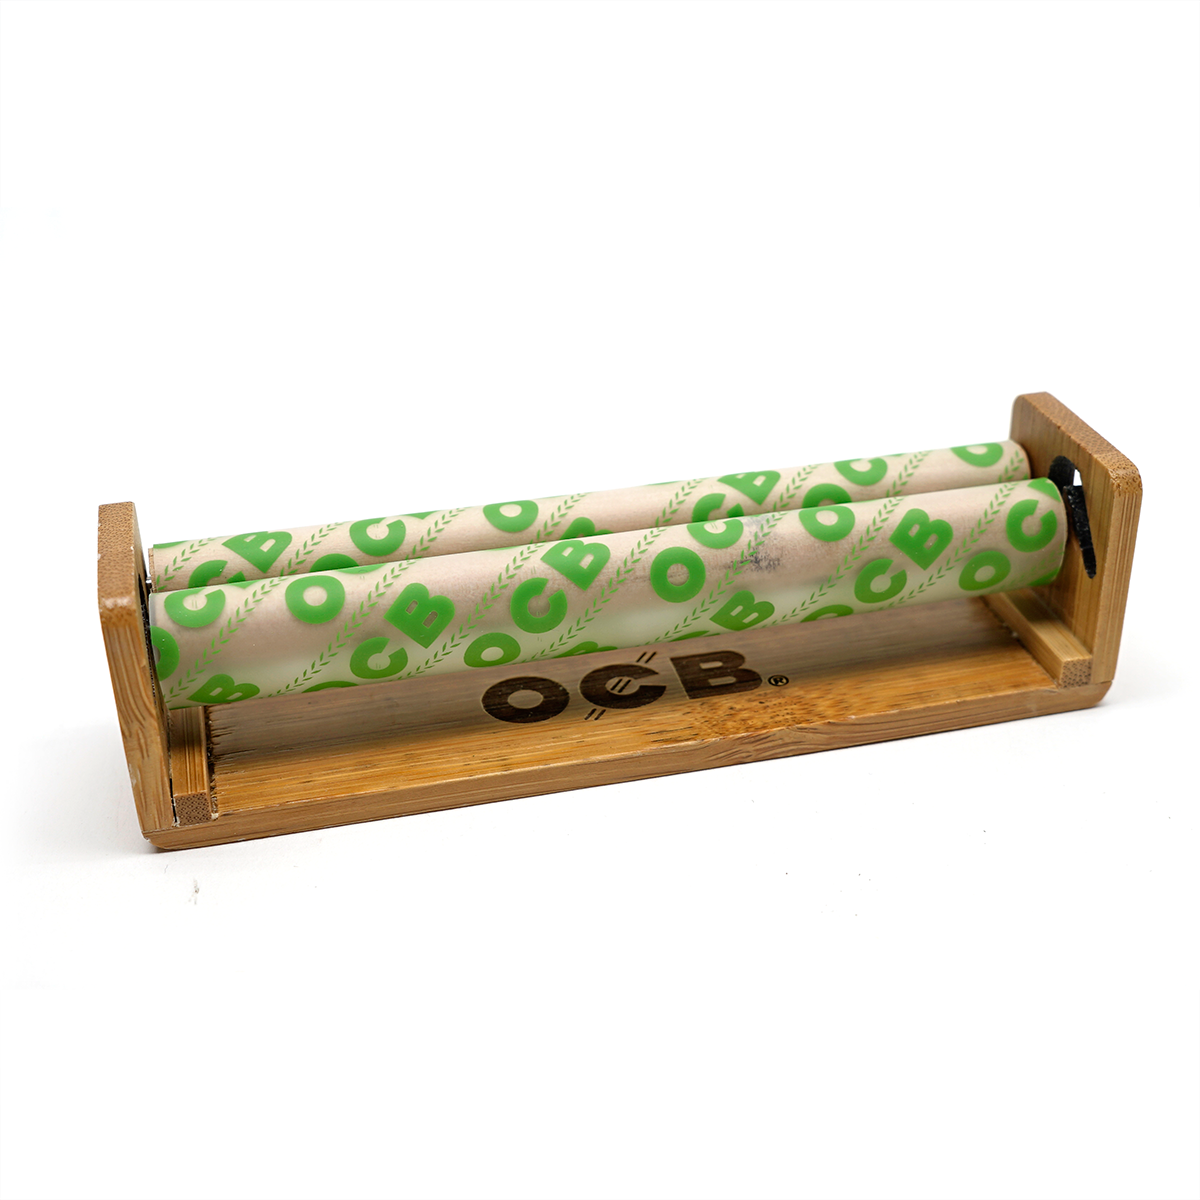 OCB - Bamboo King Size Joint Rolling Machine - HEMPER